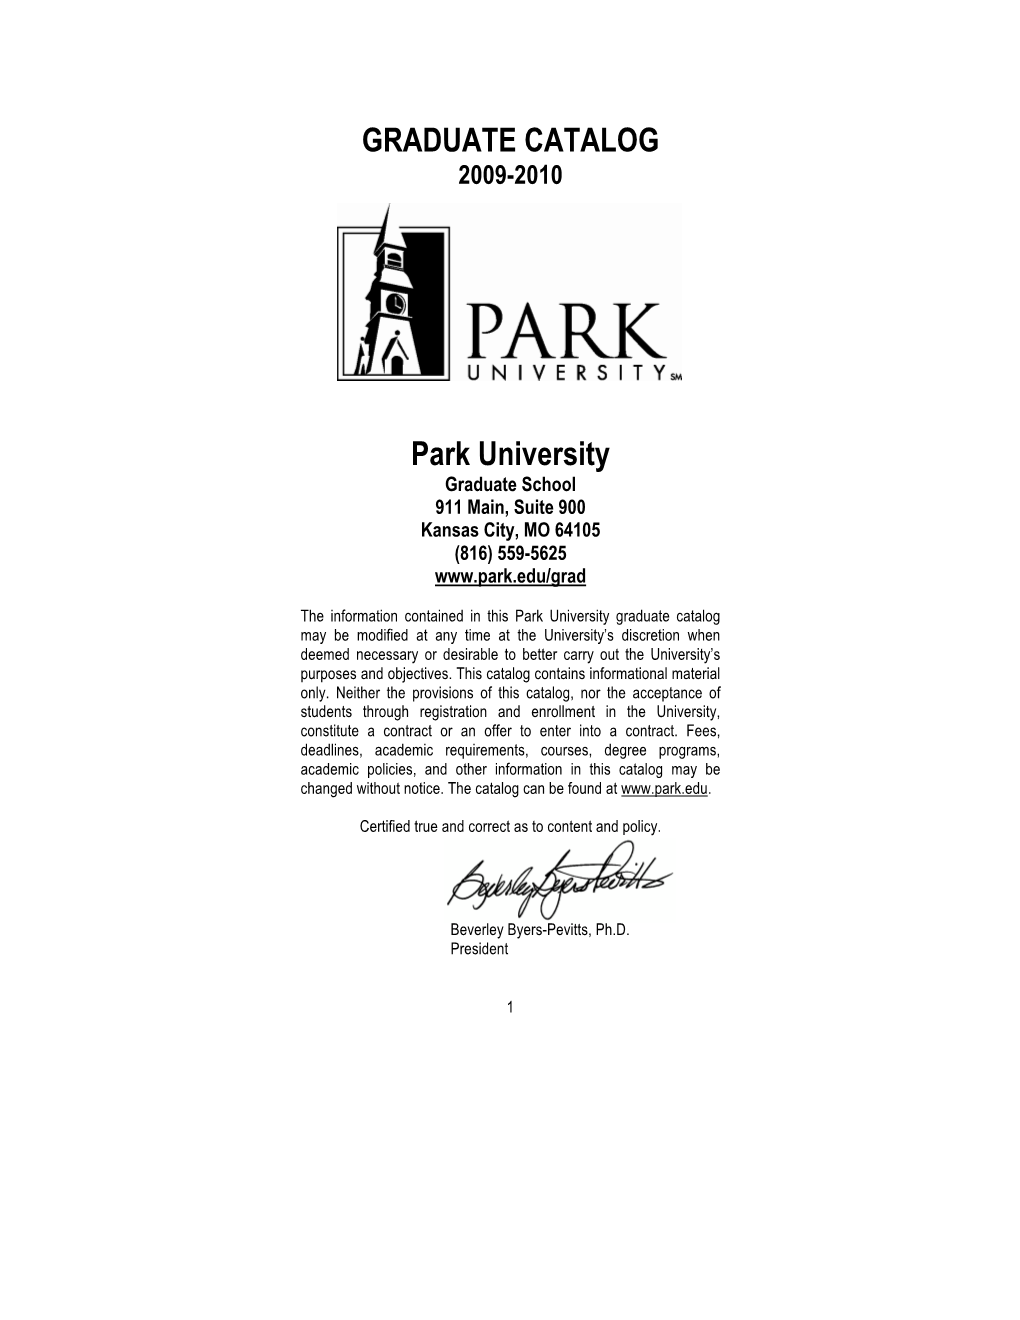 GRADUATE CATALOG Park University